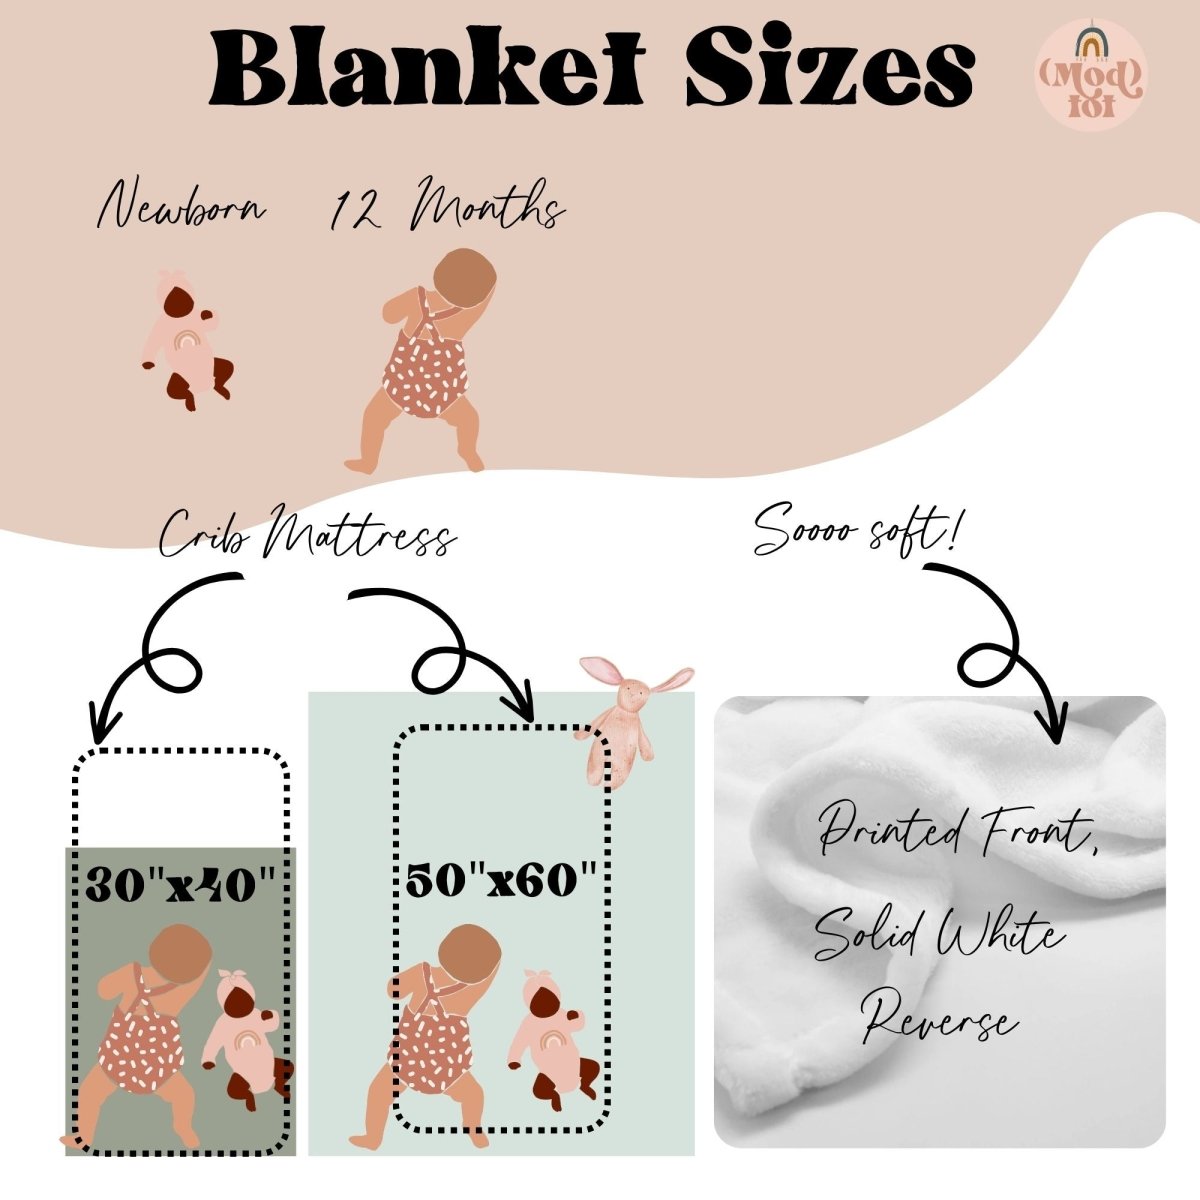 Mod Safari Personalized Minky Blanket - gender_boy, Mod Safari, Personalized_Yes